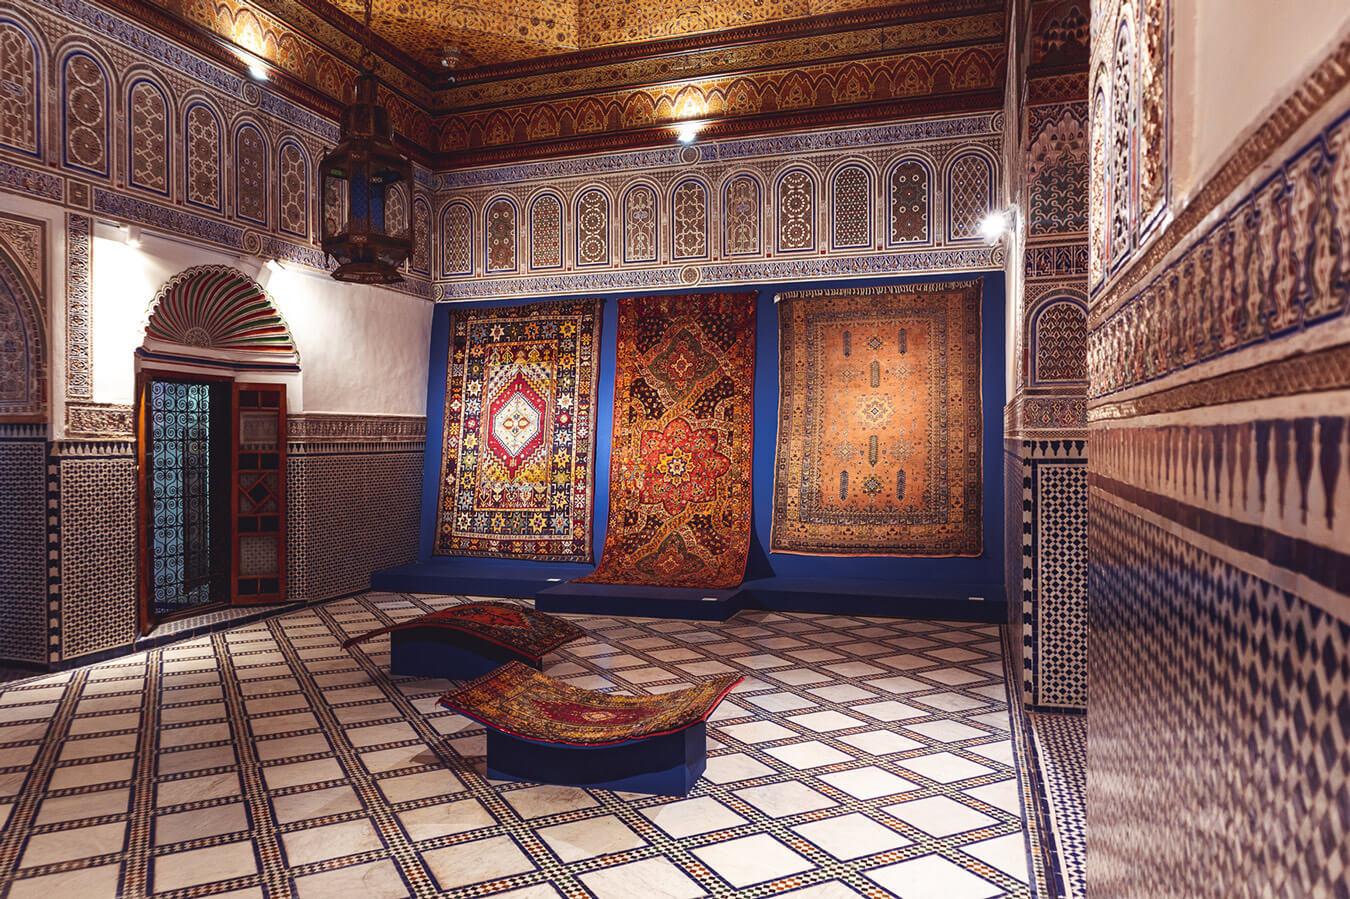 Morocco's tiles